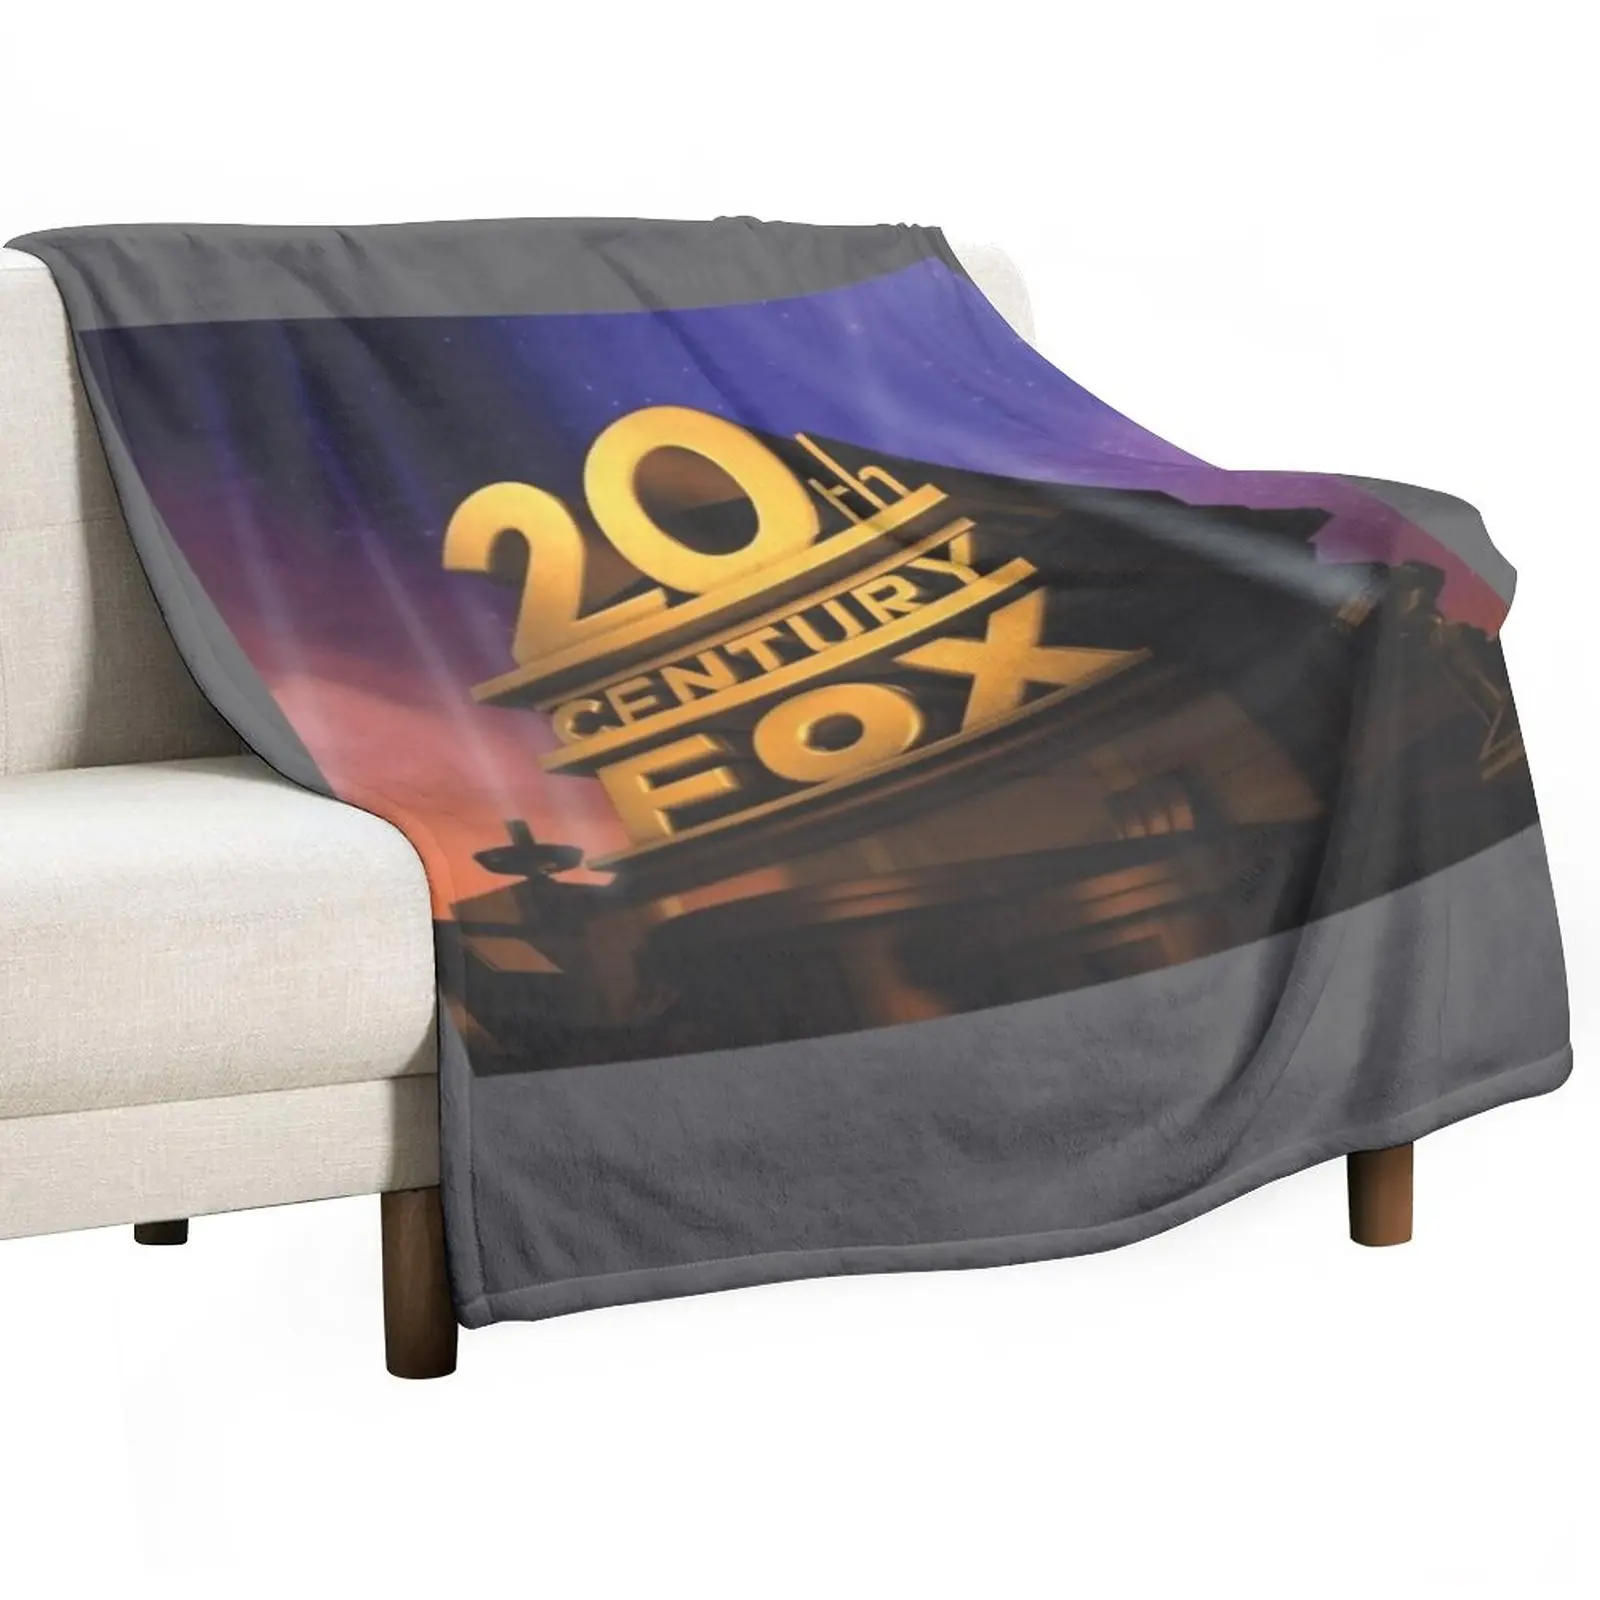 

20th Century Fox Throw Blanket Luxury Throw Blanket Sofa Blankets